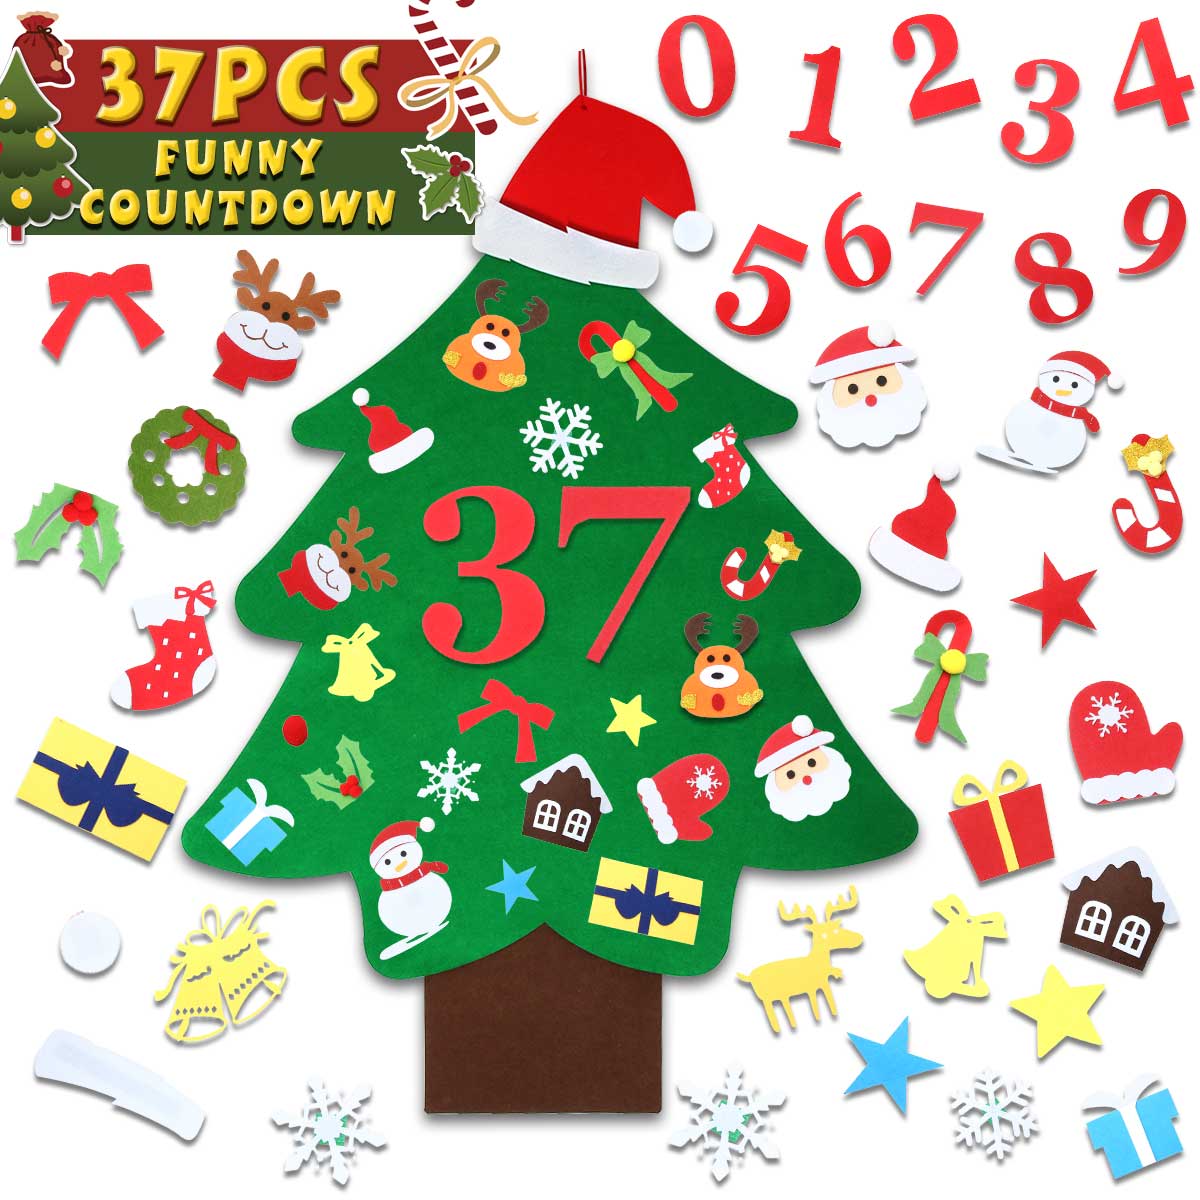 SAFETYON-DIY-Felt-Christmas-Tree-With-37PCS-Ornaments-1898979-1